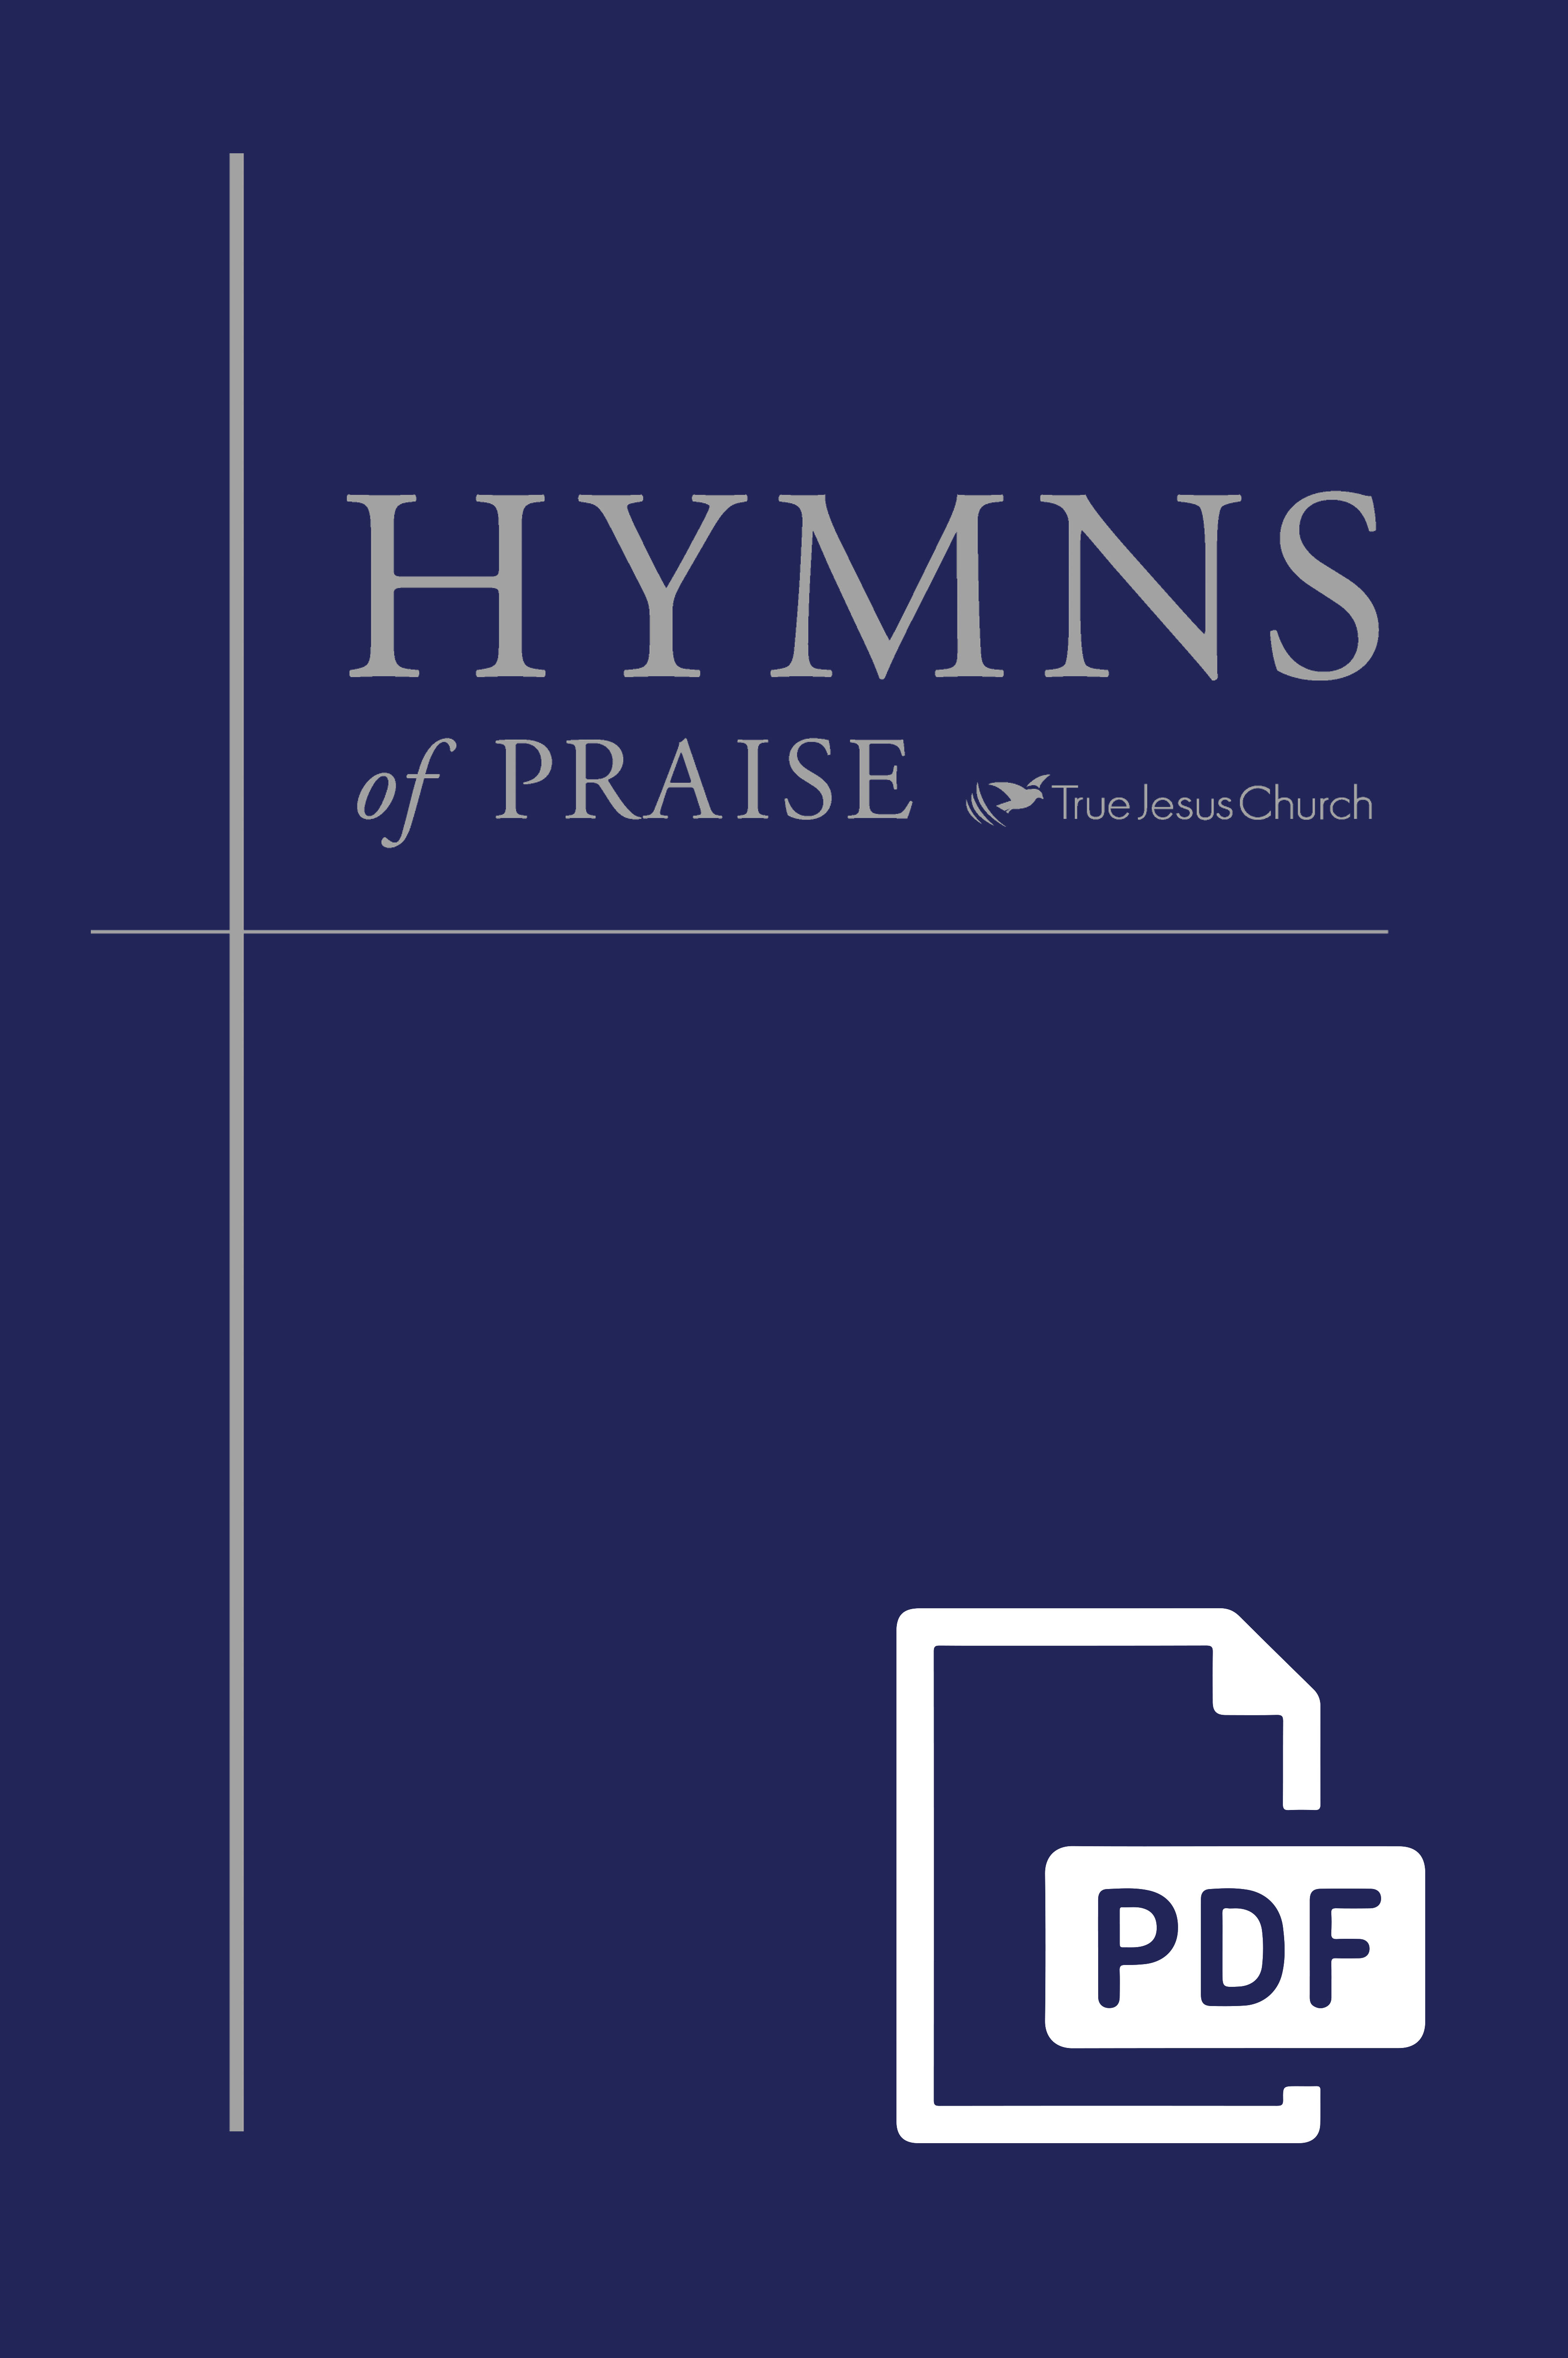 Hymns of Praise PDF version (English)